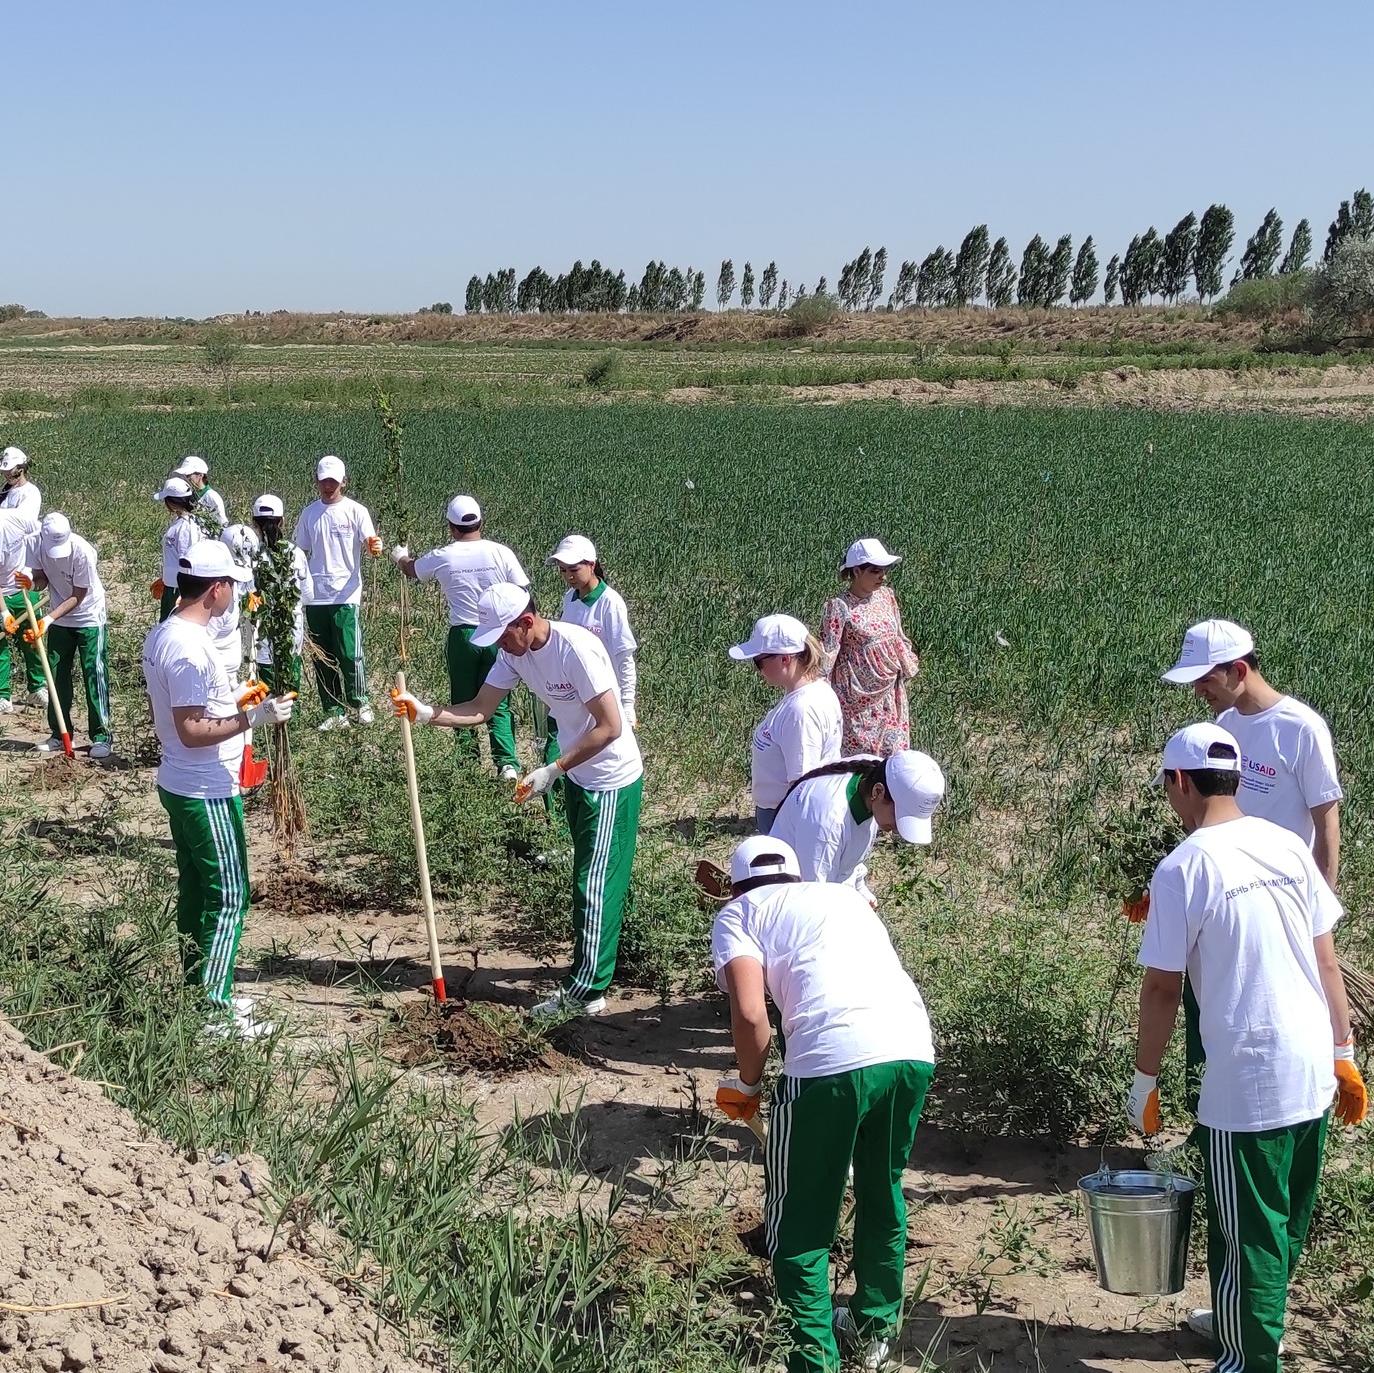 National celebration of Amu Darya River Day in Turkmenistan